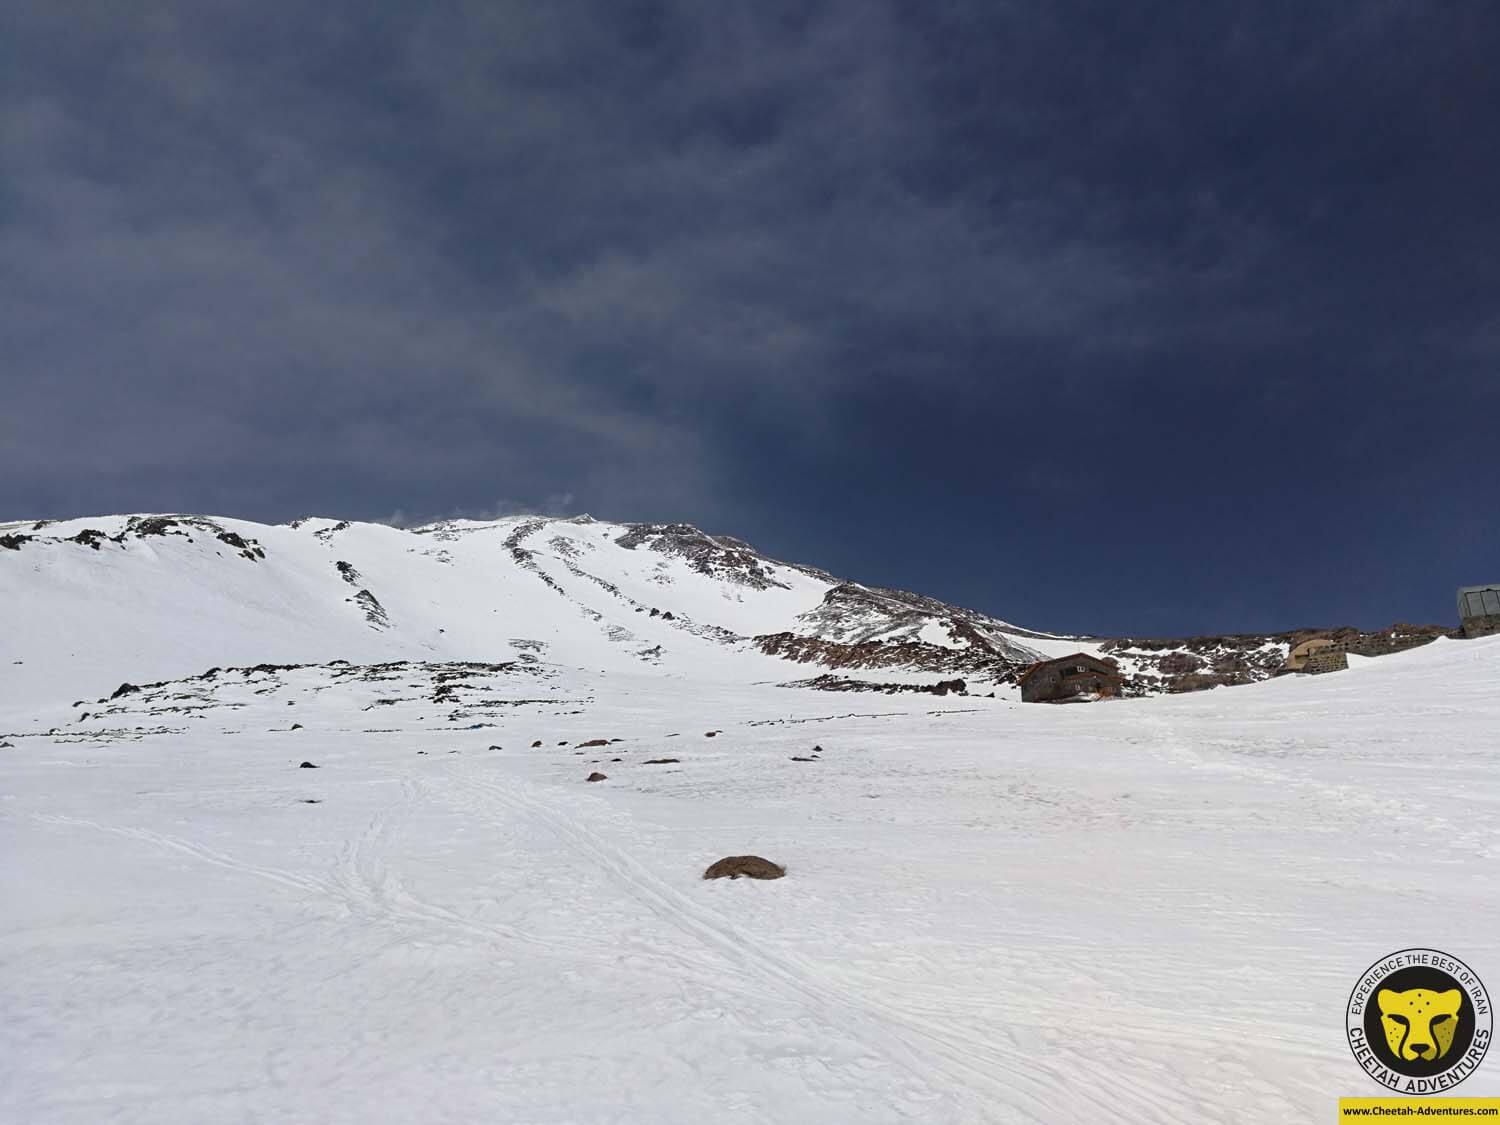 5-3 Arriving at Bargah-e Sevom Hut (4200m), Damavand Ski Touring